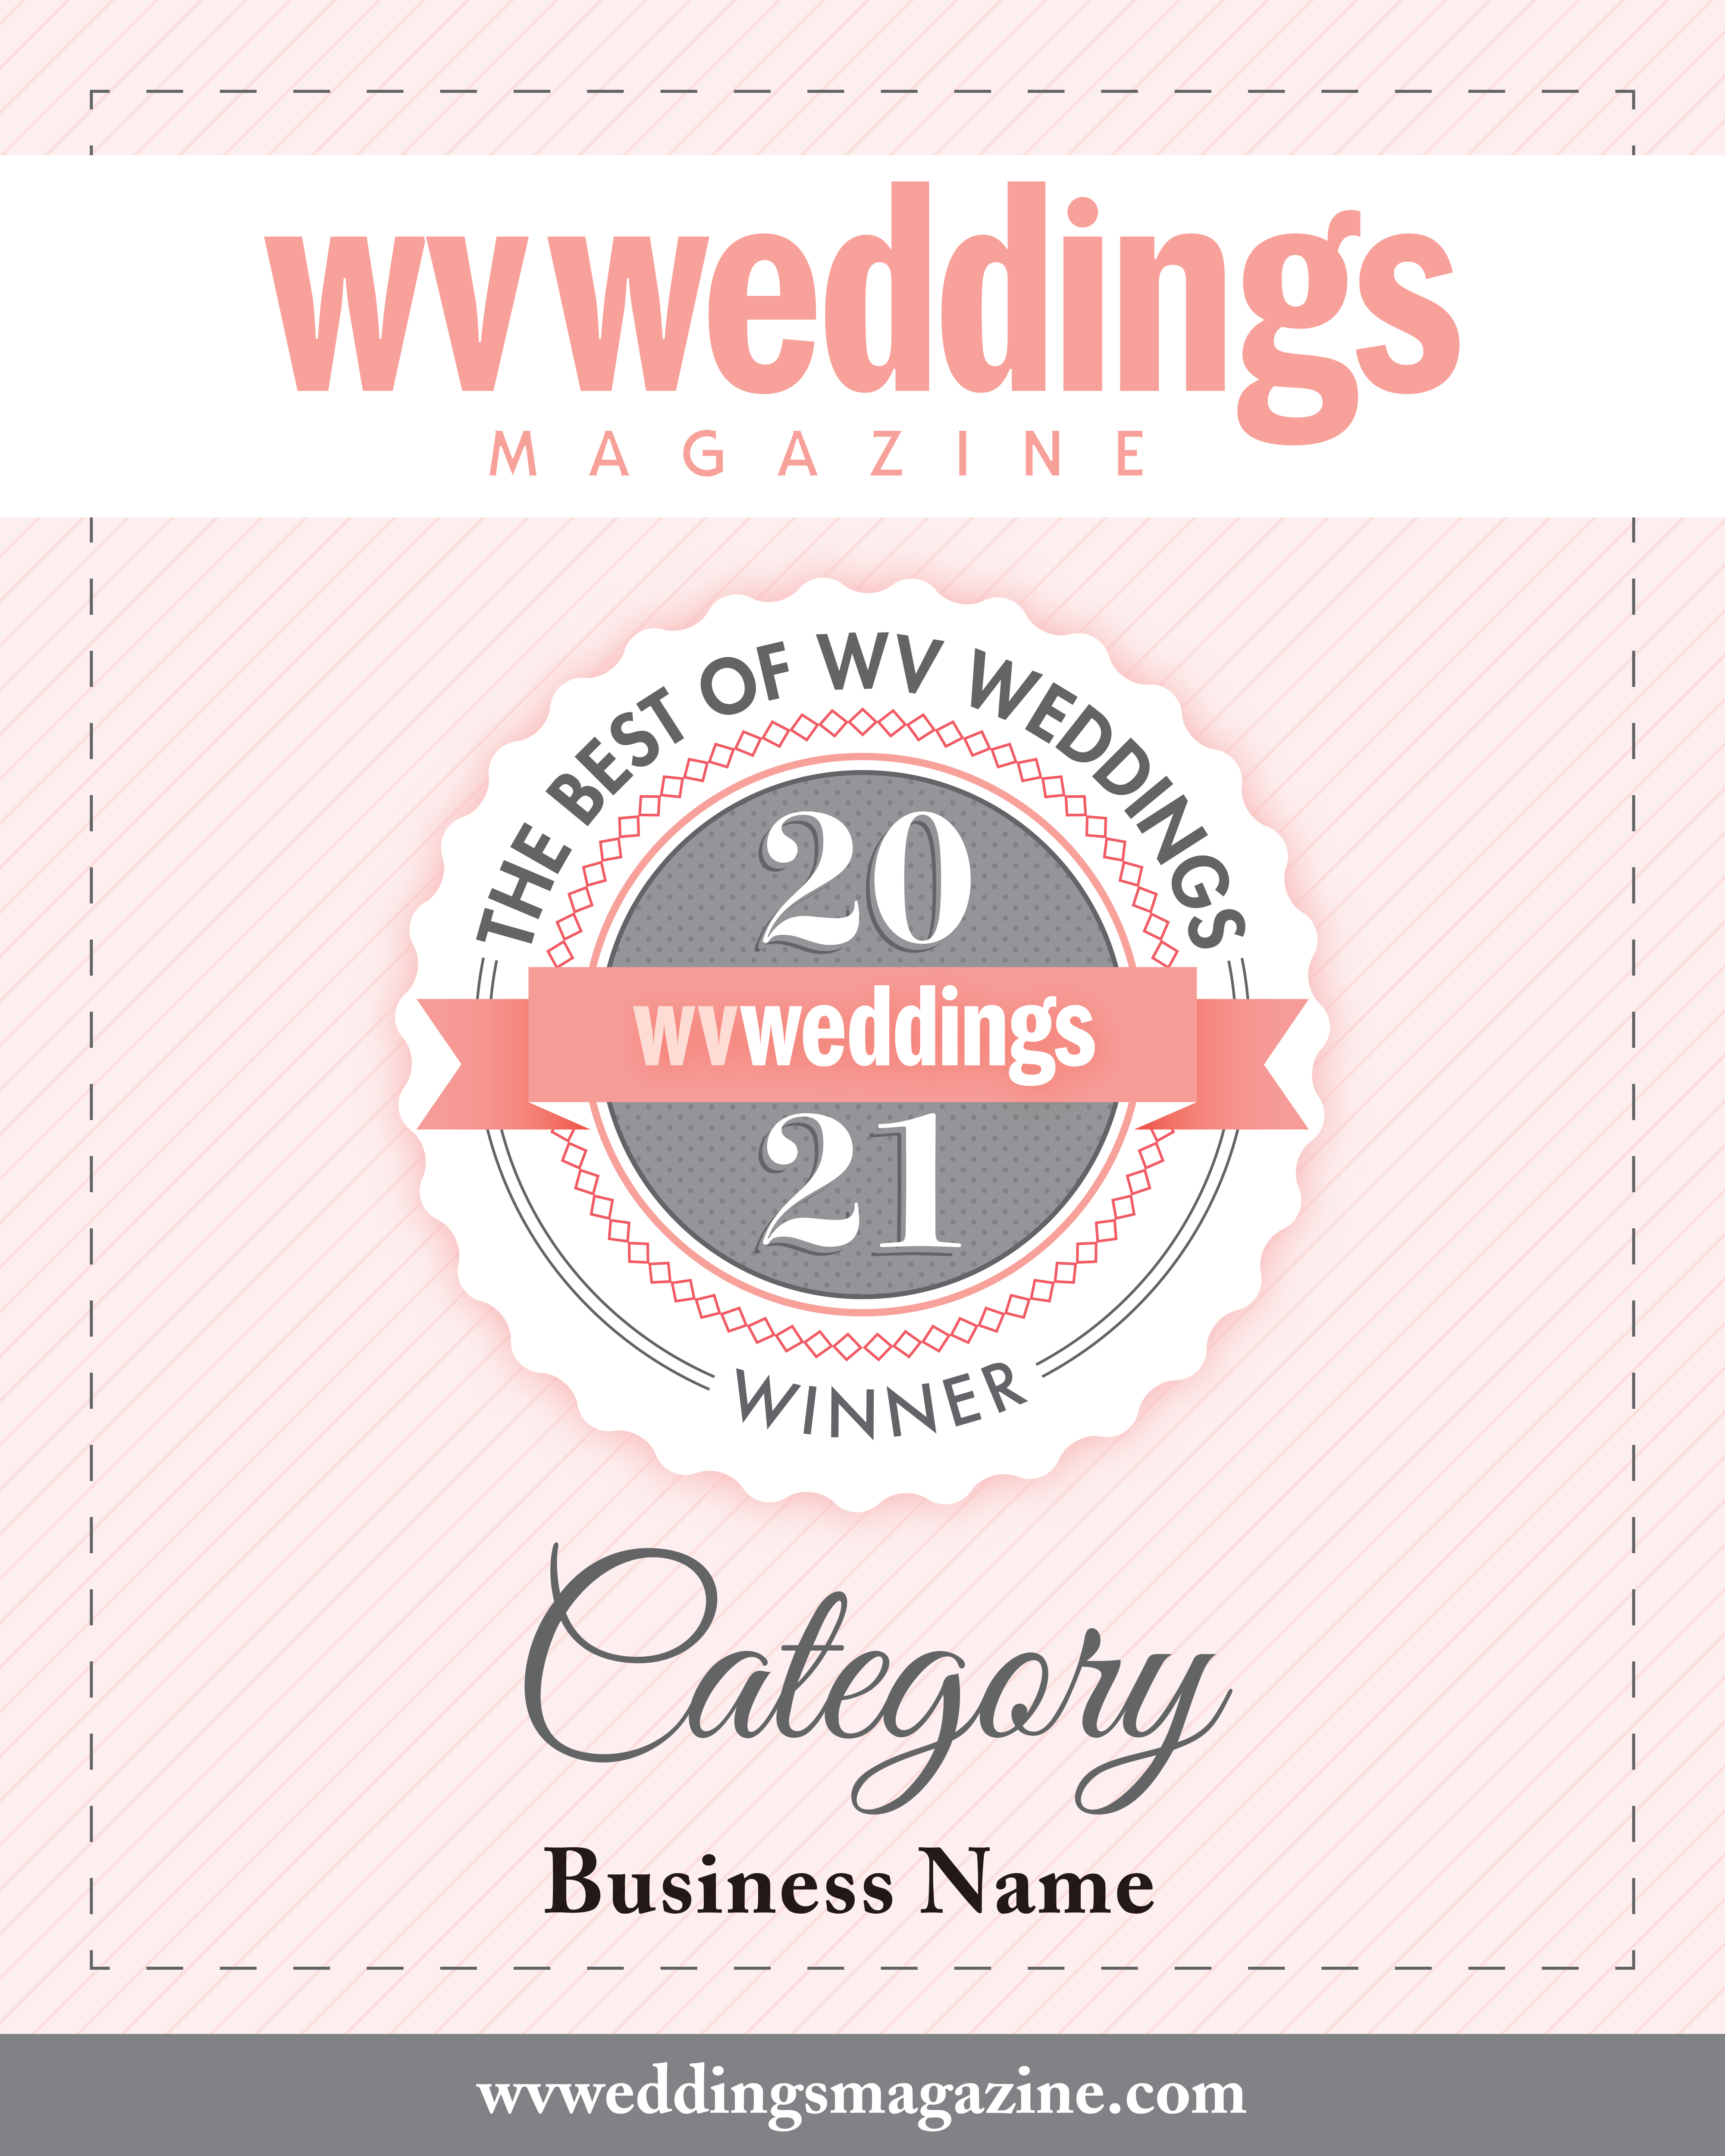 Best of WV Weddings 2021 Customized Winner Plaque